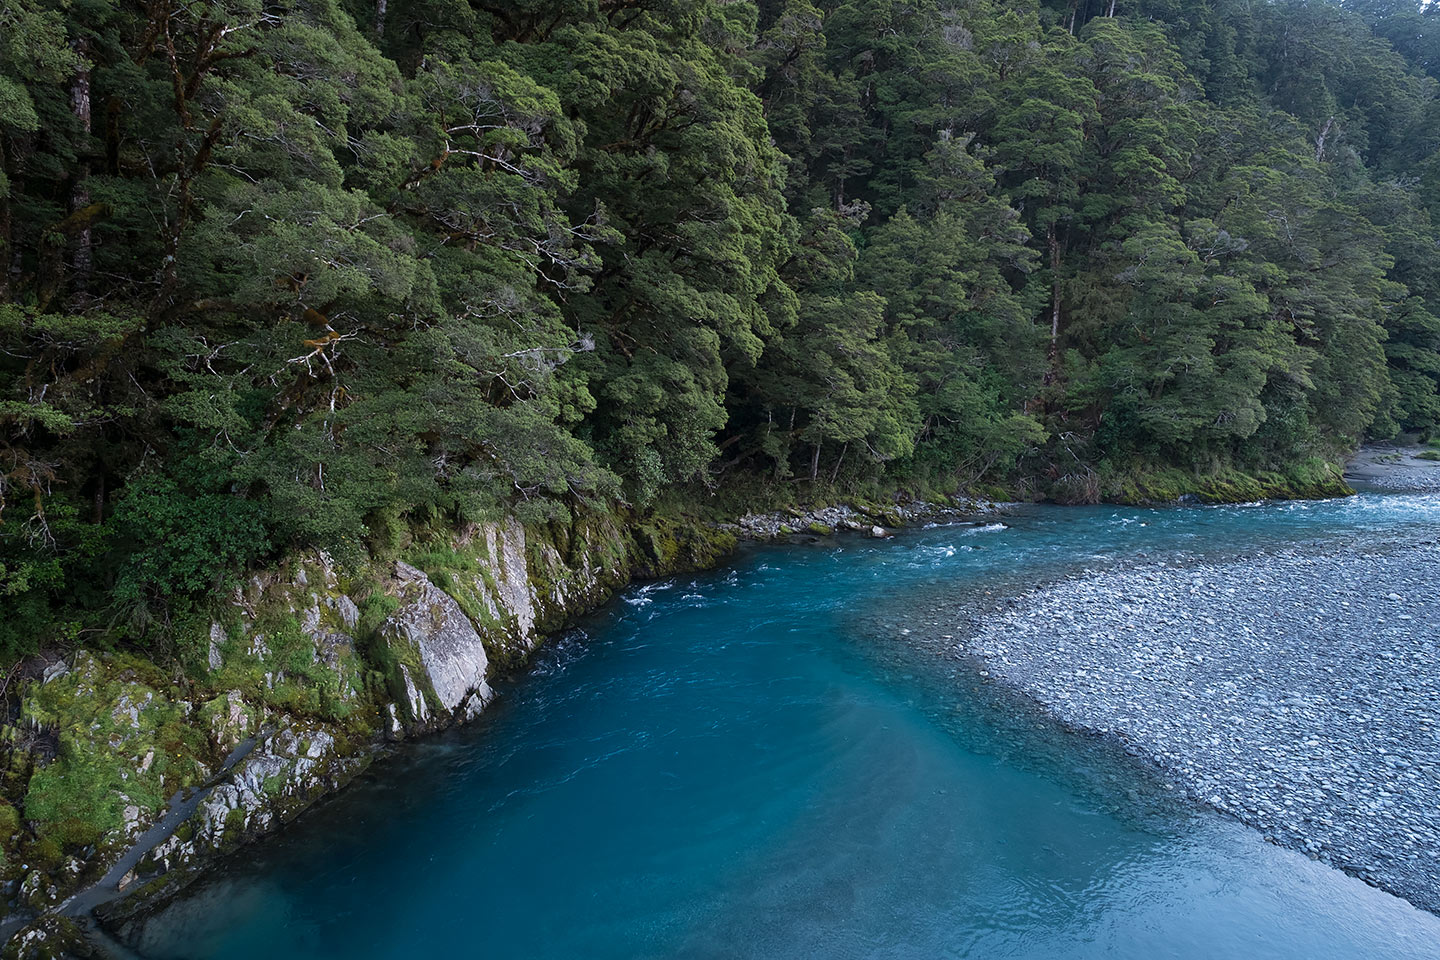 Blue Pools, Mount Aspiring National Park, New Zealand